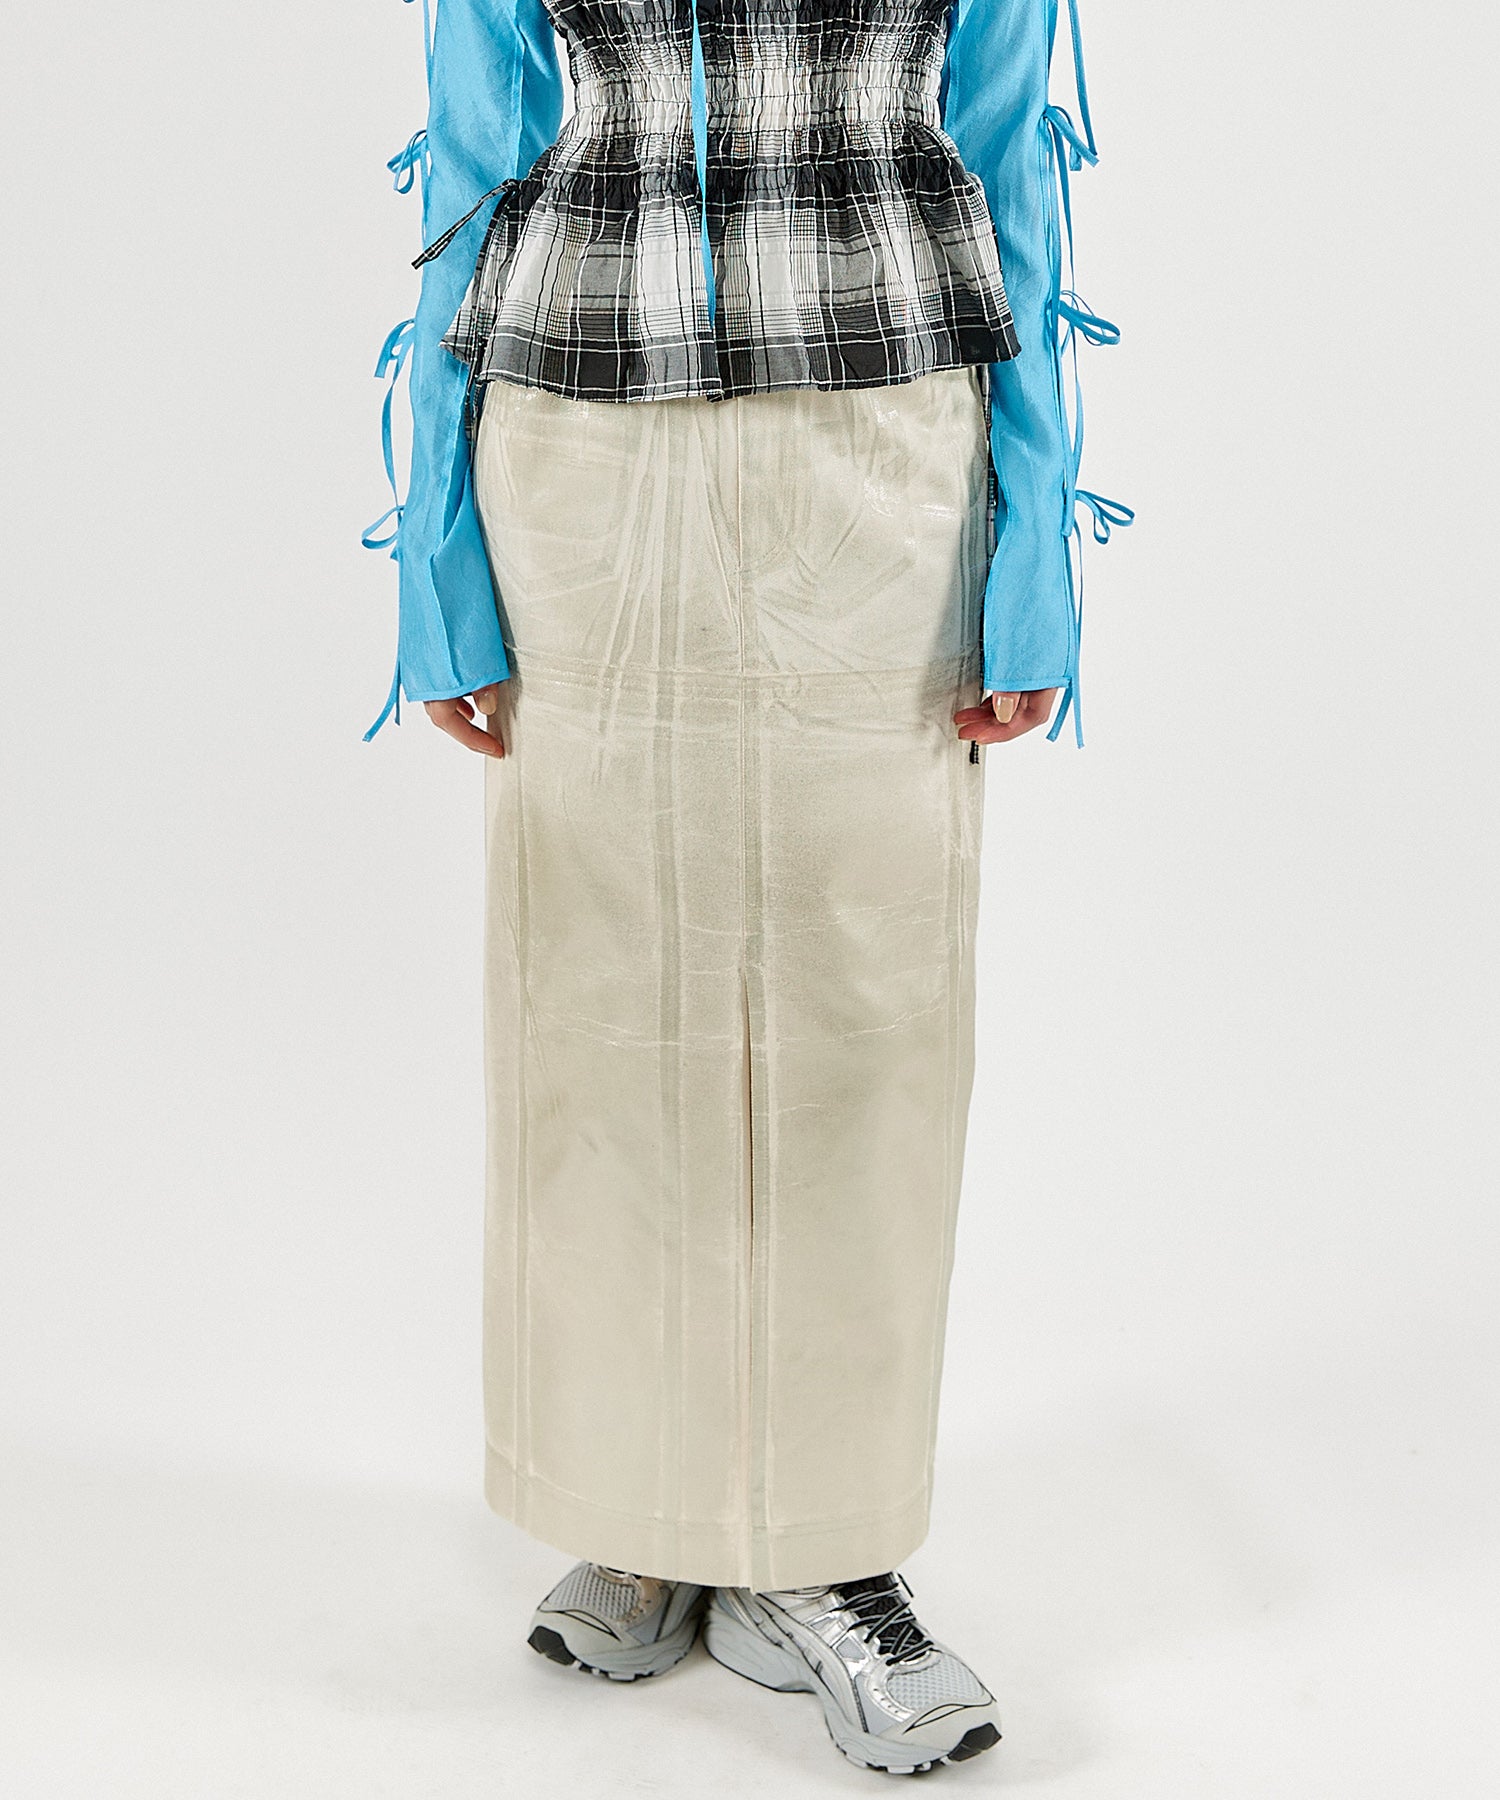 Sparkling Foil Handouted Gradation Skirt